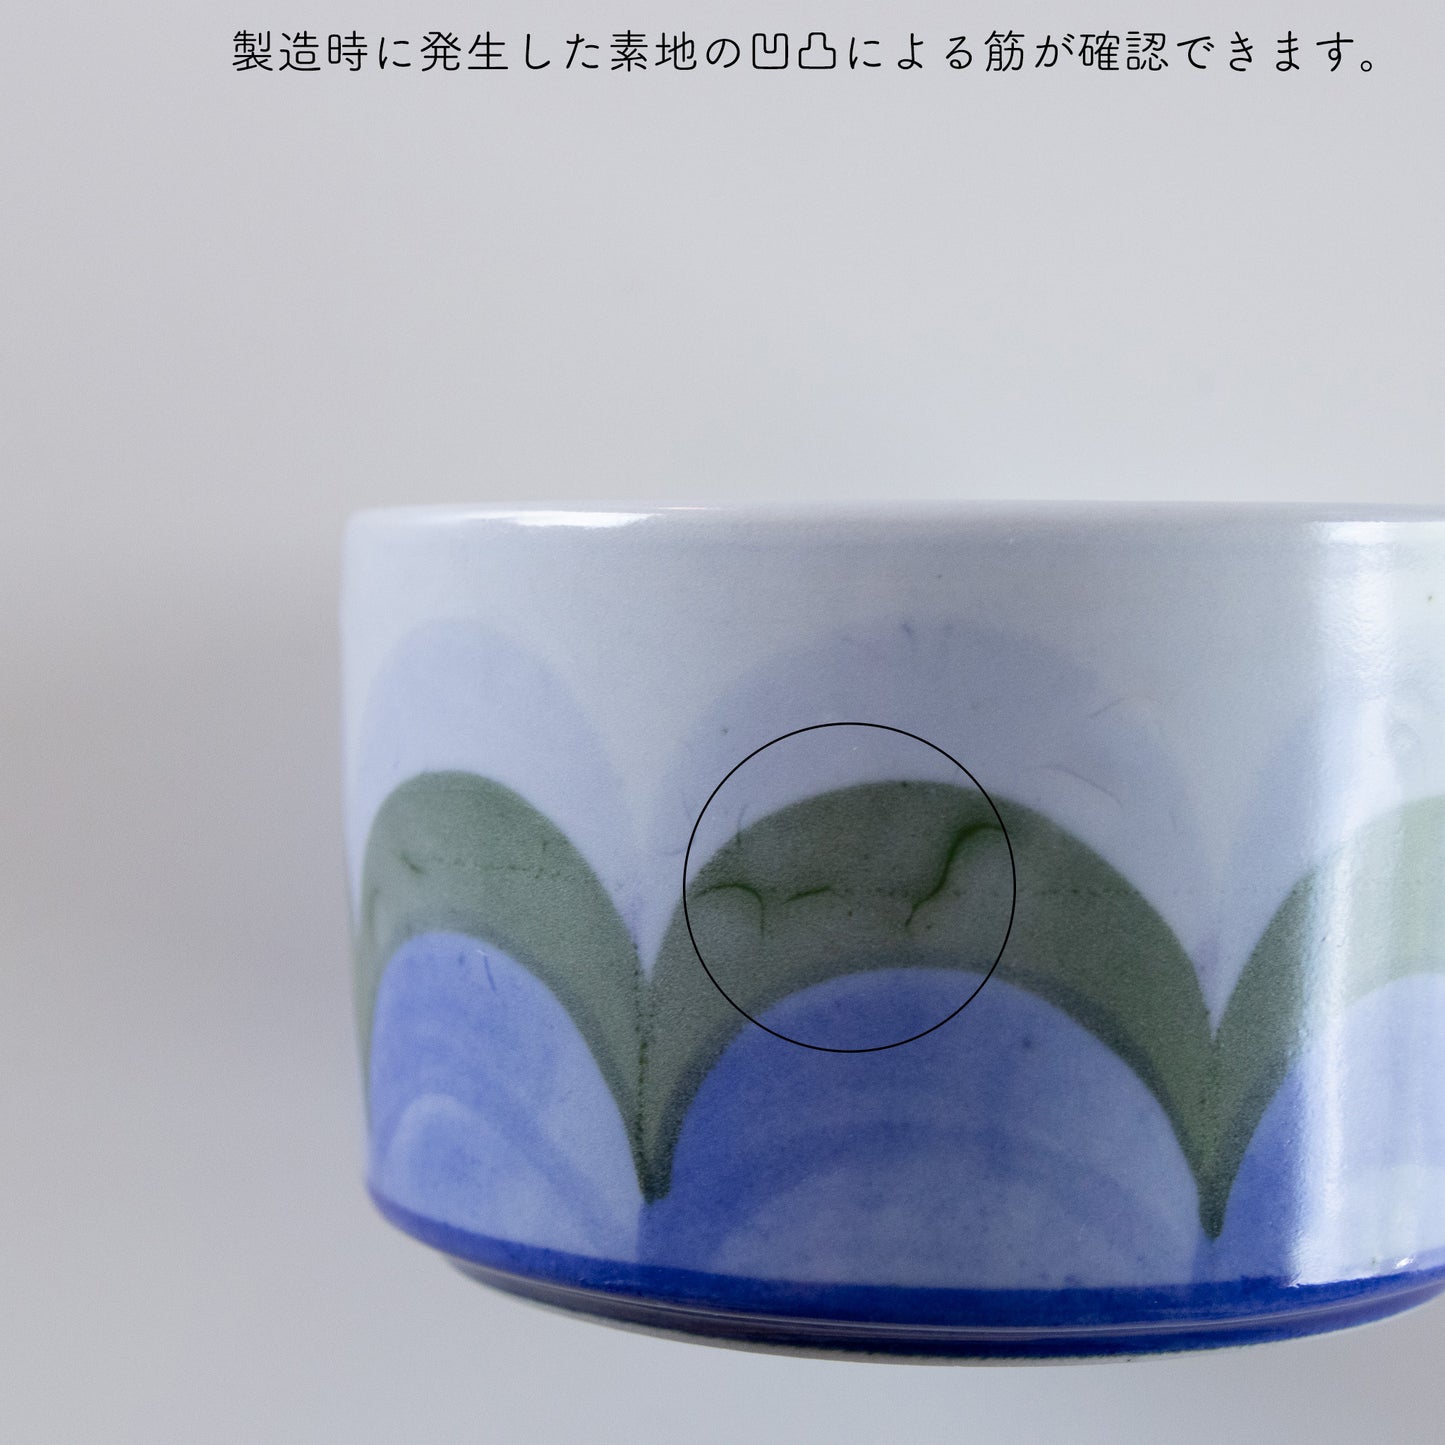 blue 9.0cm bowl / PENTIK (ペンティック)